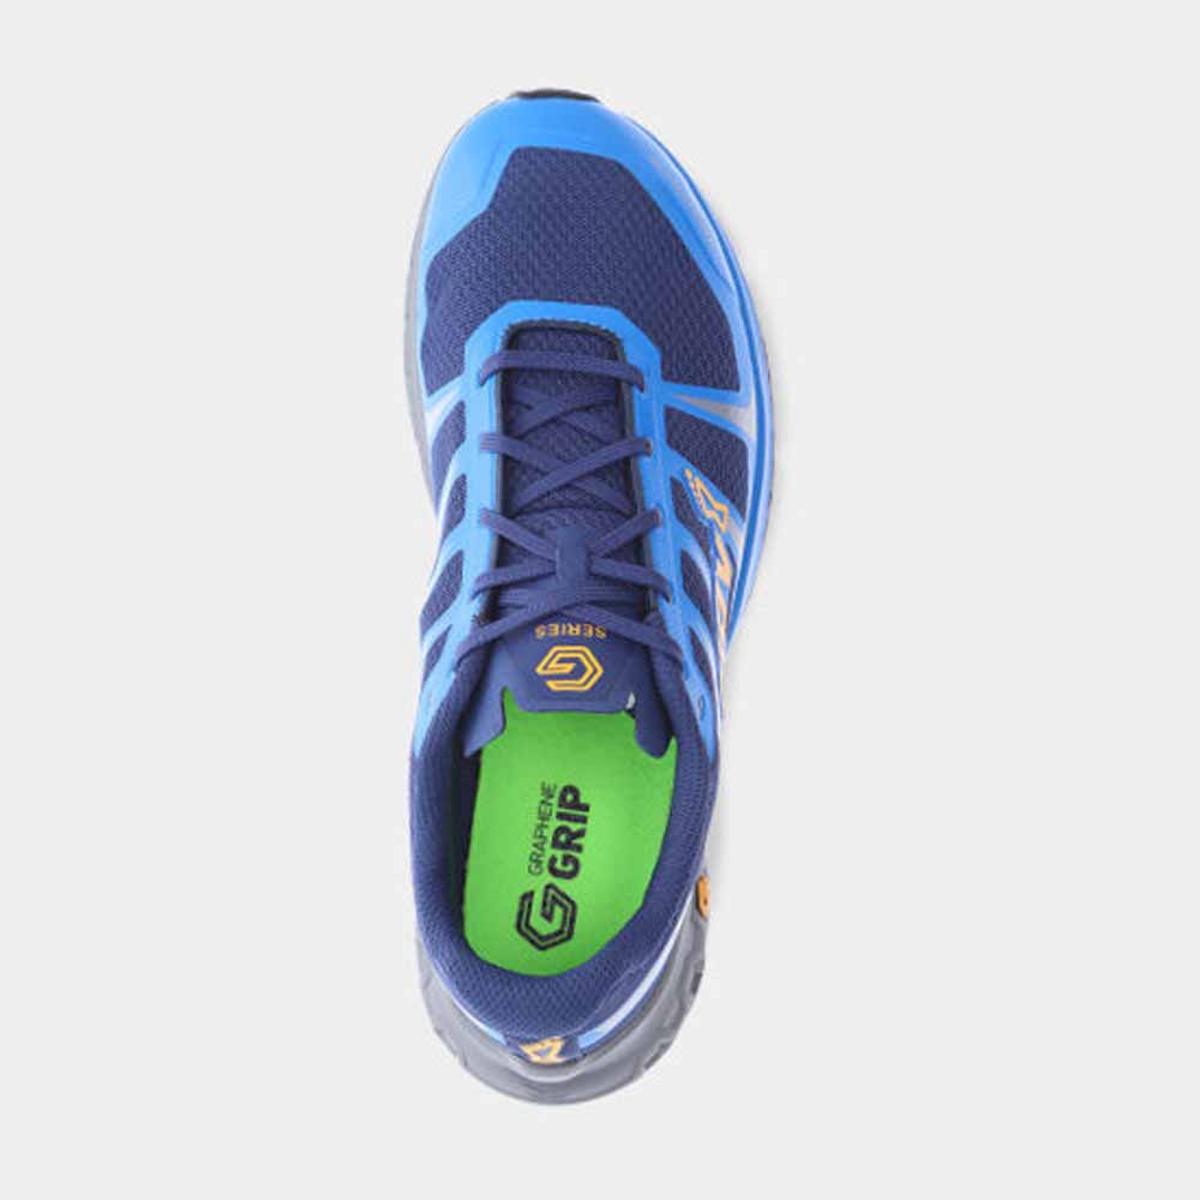 Inov-8 Men's TrailFly Ultra G 300 Max Running Shoes